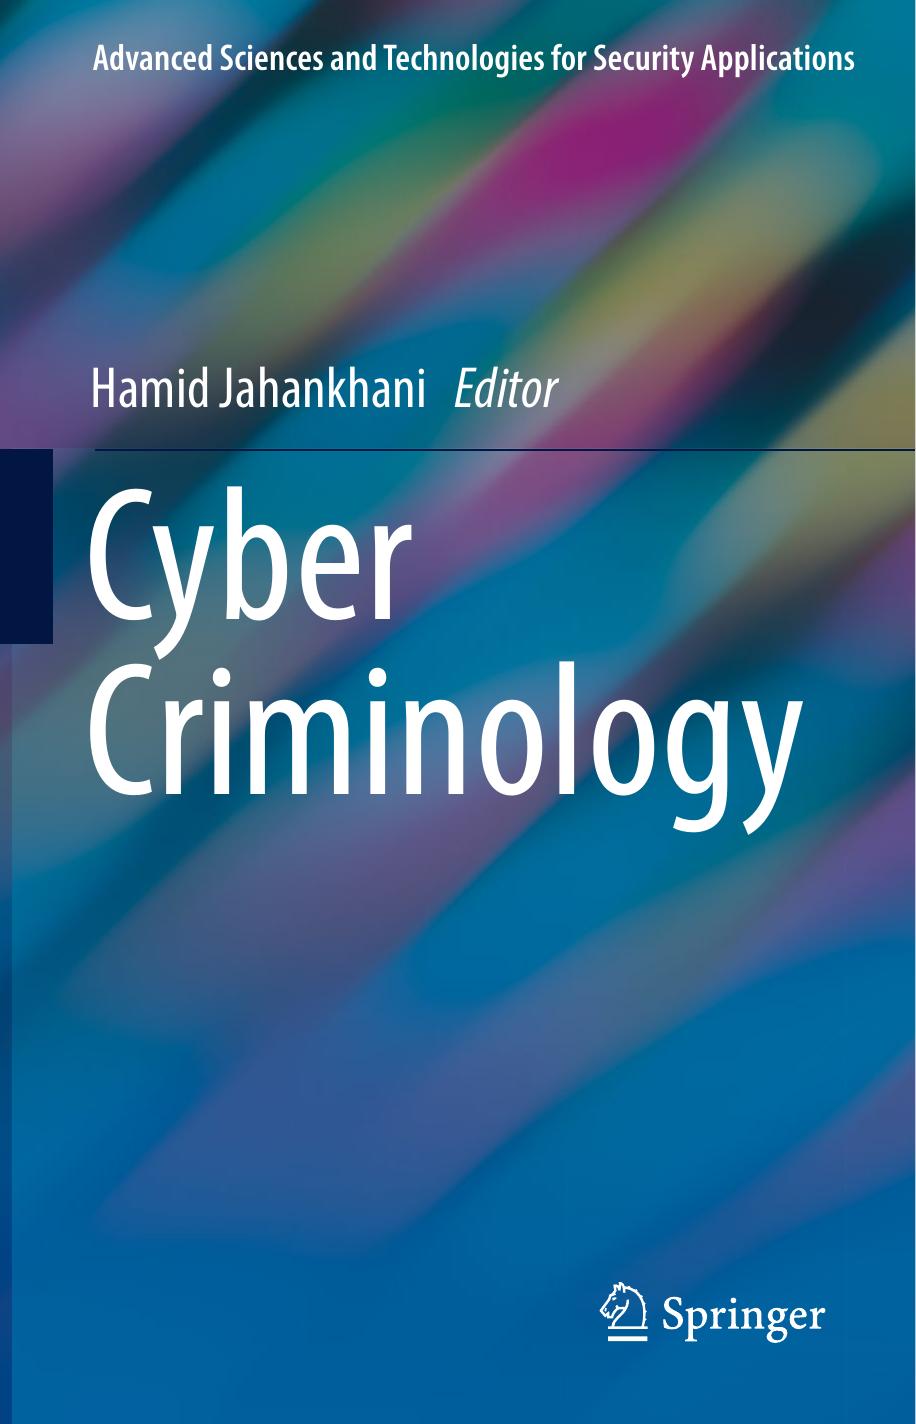 Cyber Criminology 2018